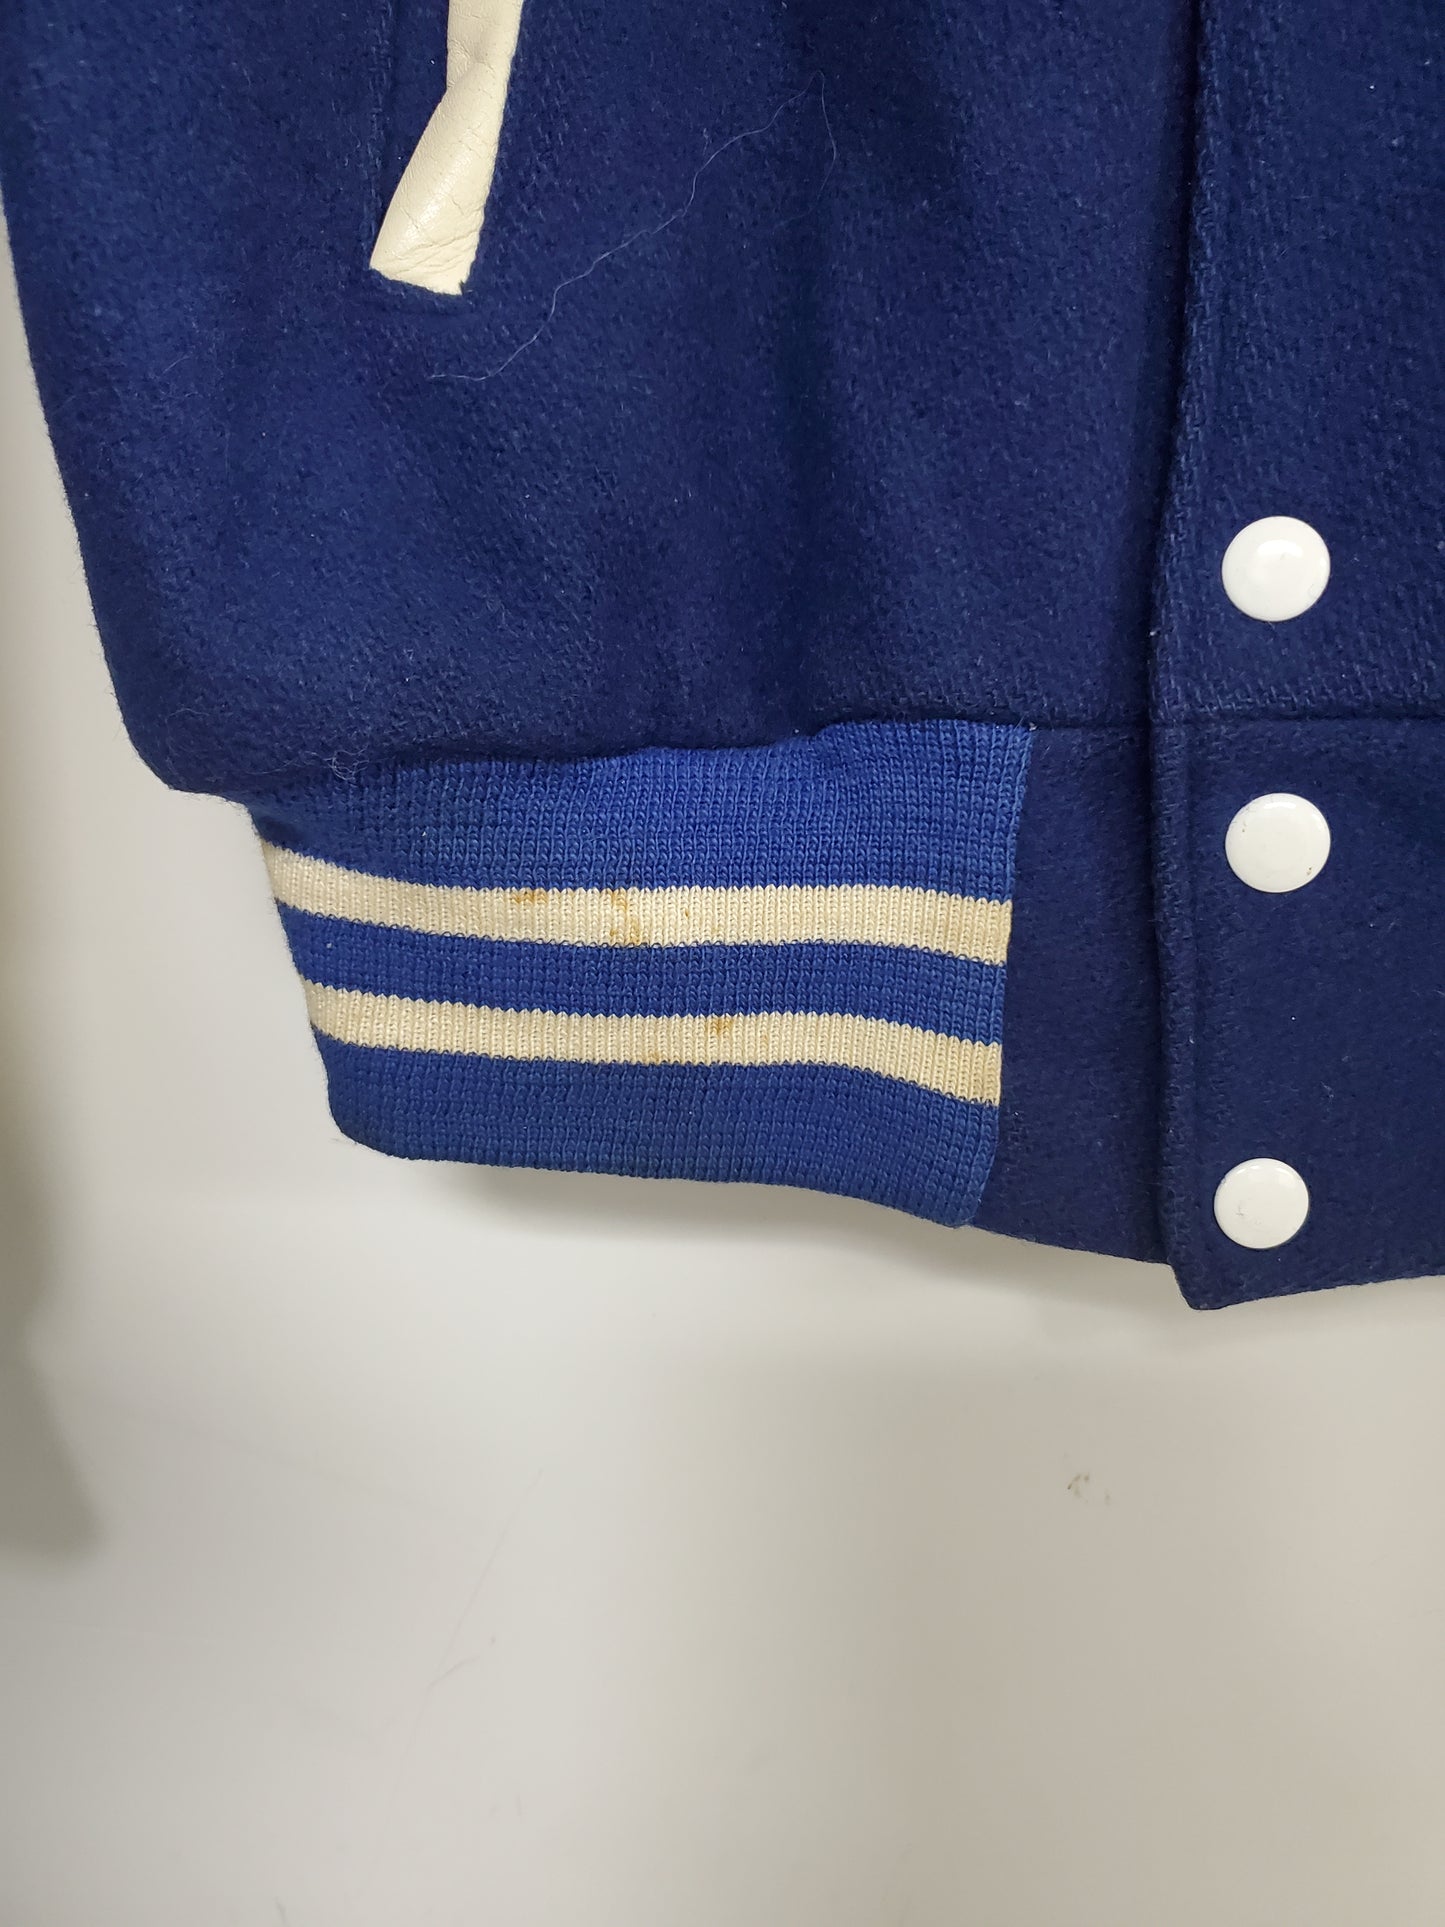 Vintage St. Xavier Varsity Jacket Size Medium